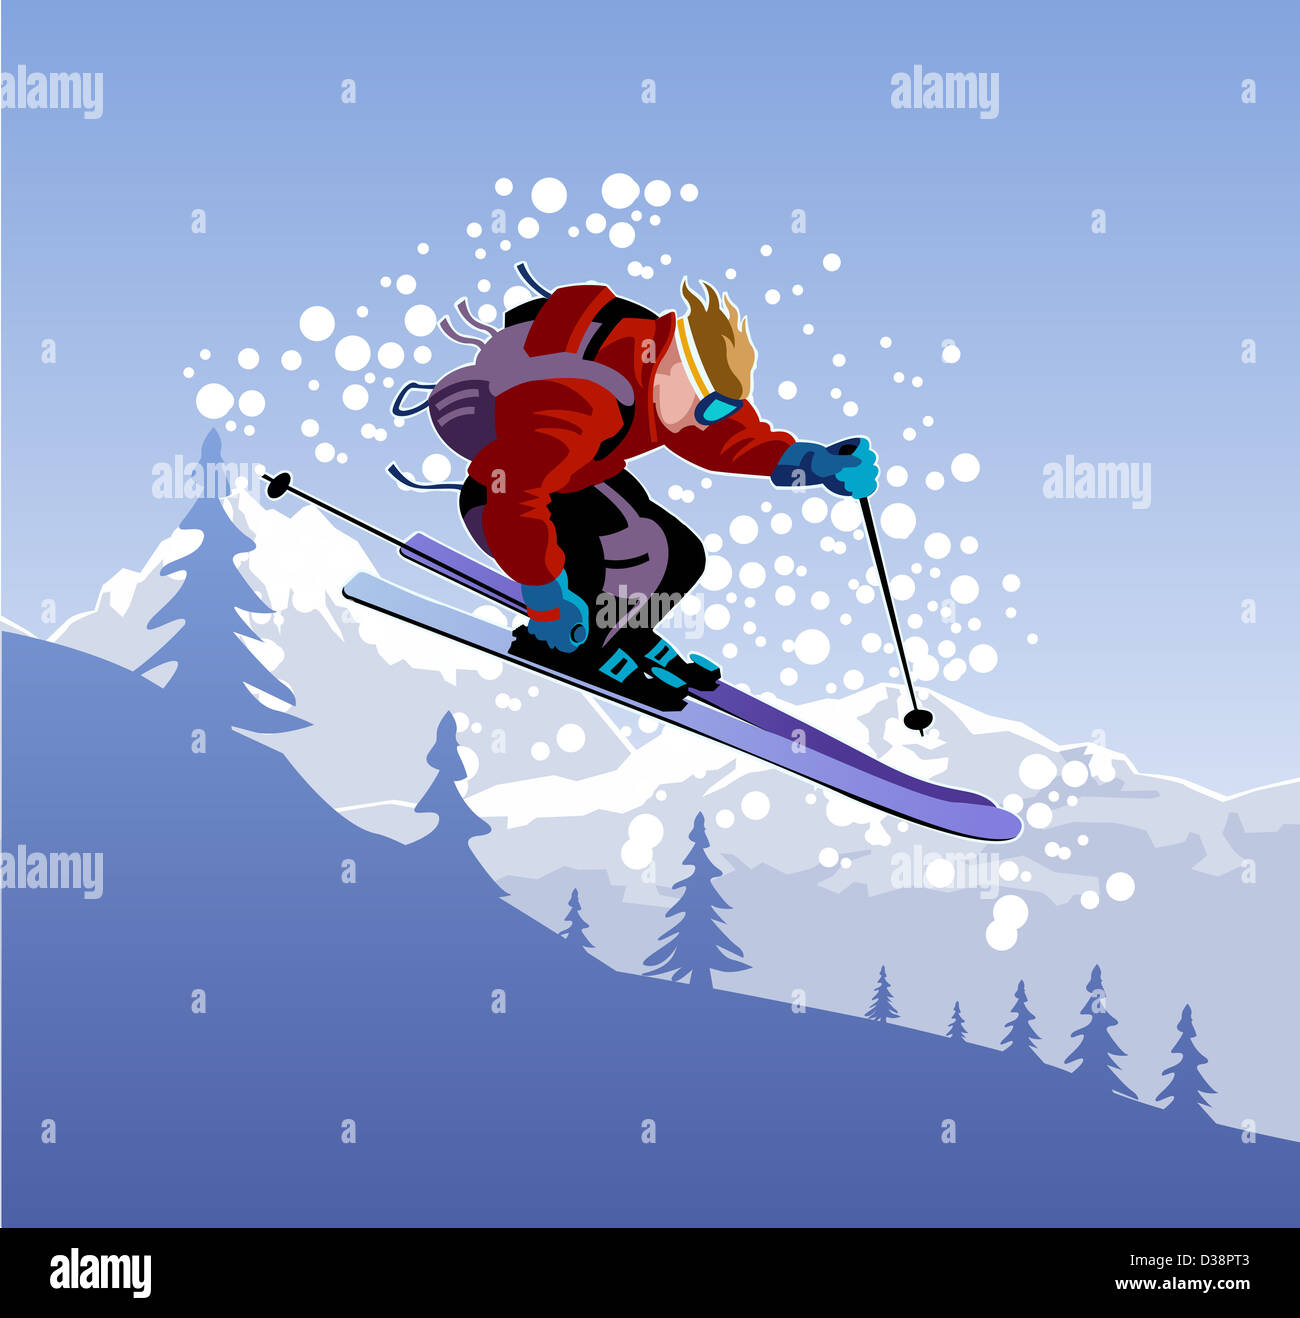 Man jumping while skiing Stock Photo